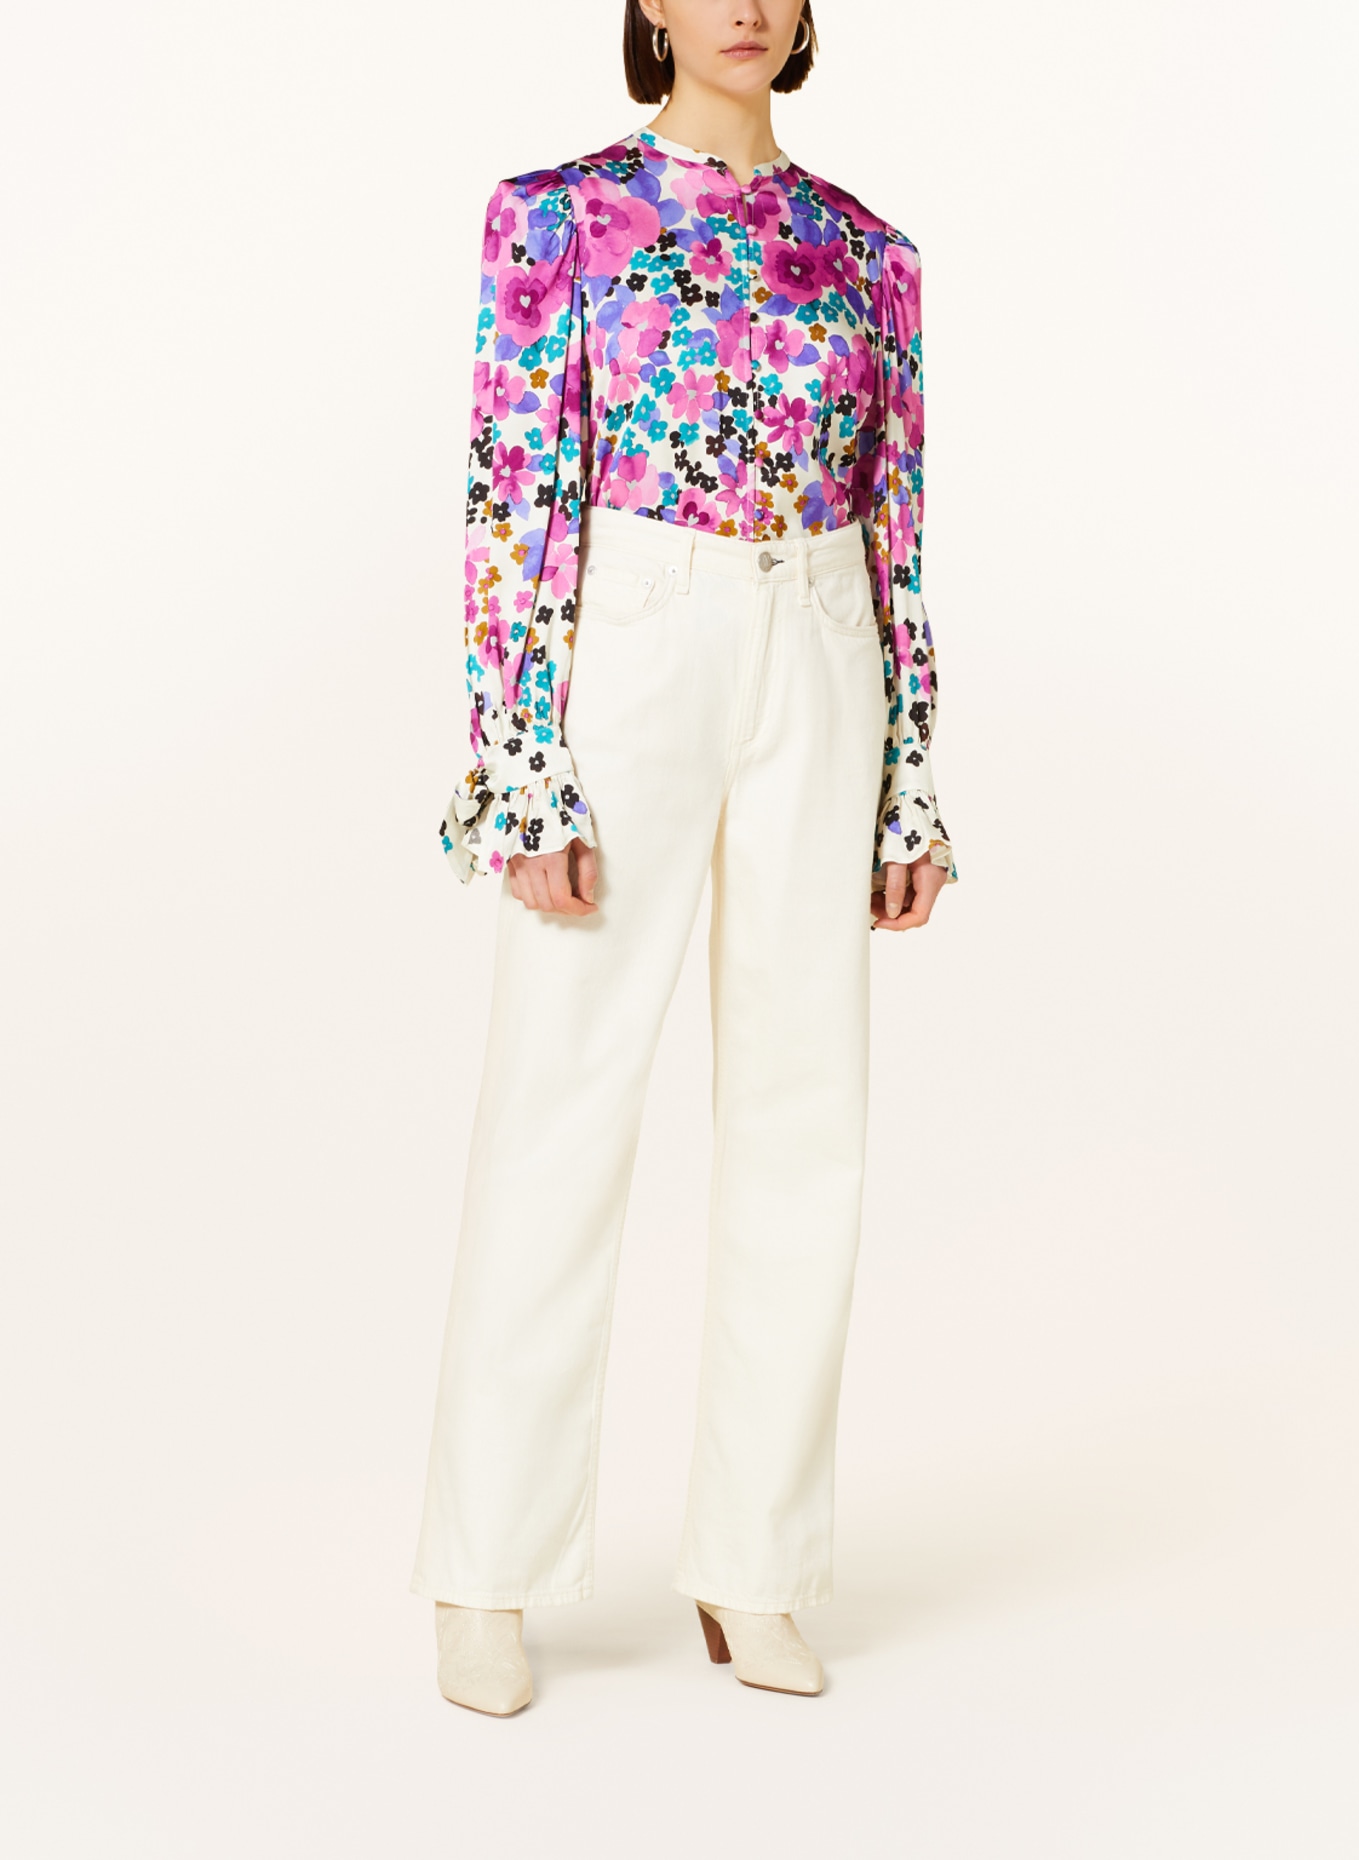 FABIENNE CHAPOT Satin blouse KYLIE in ecru/ fuchsia/ teal | Breuninger